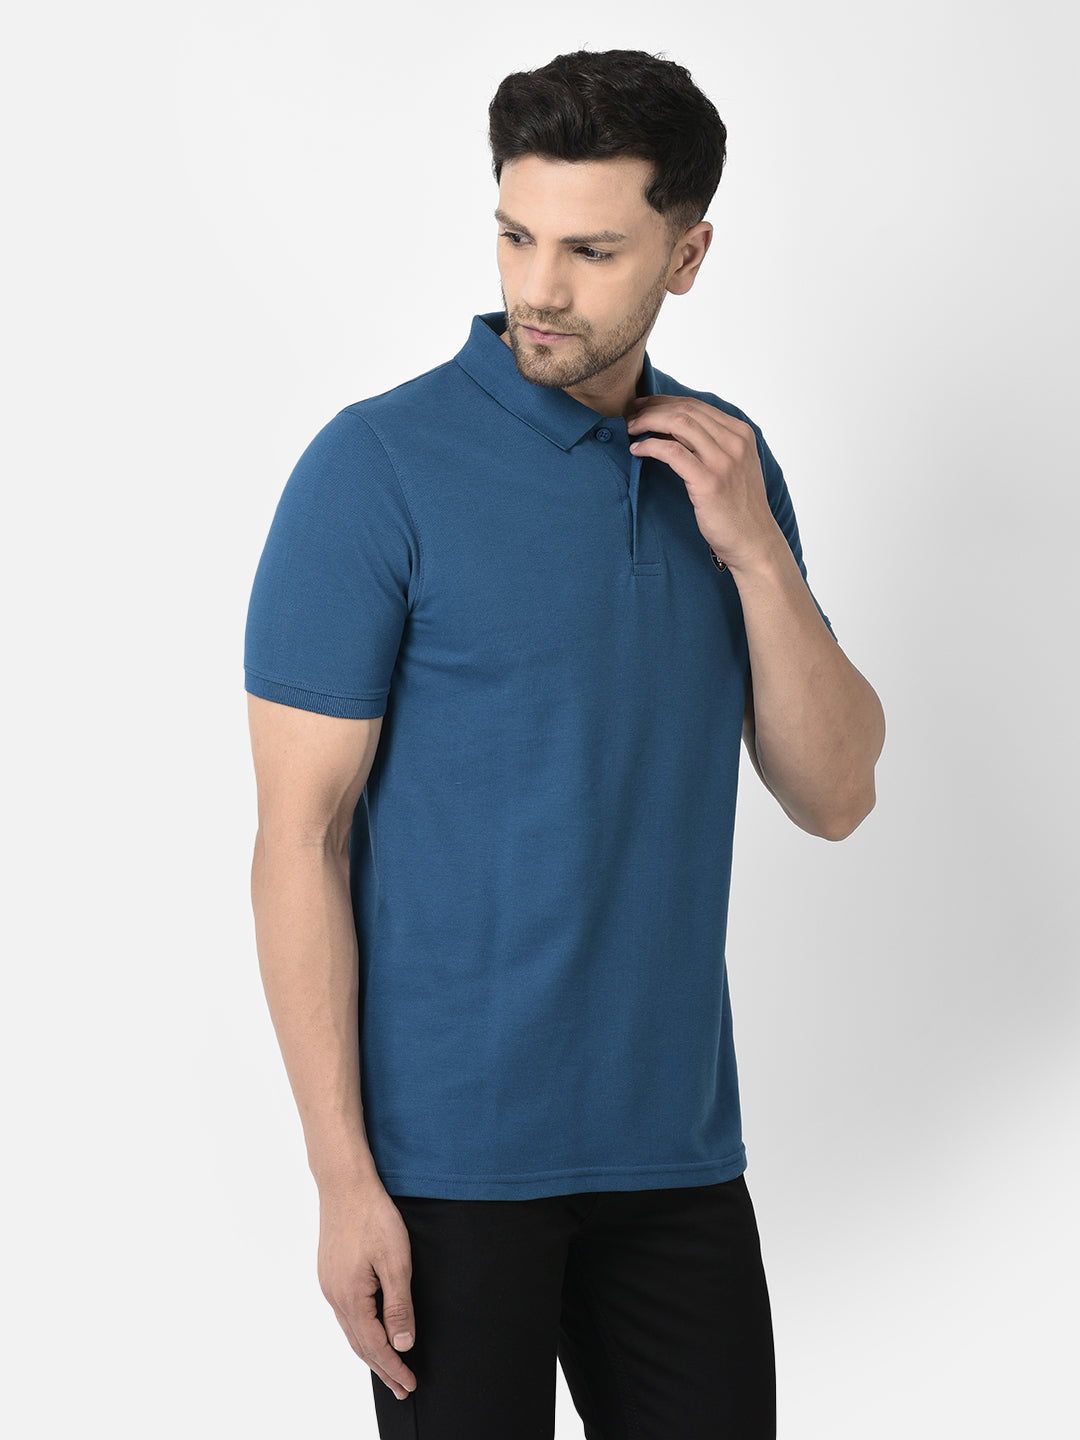 Cobb Teal Blue Solid Slim Fit T-Shirt